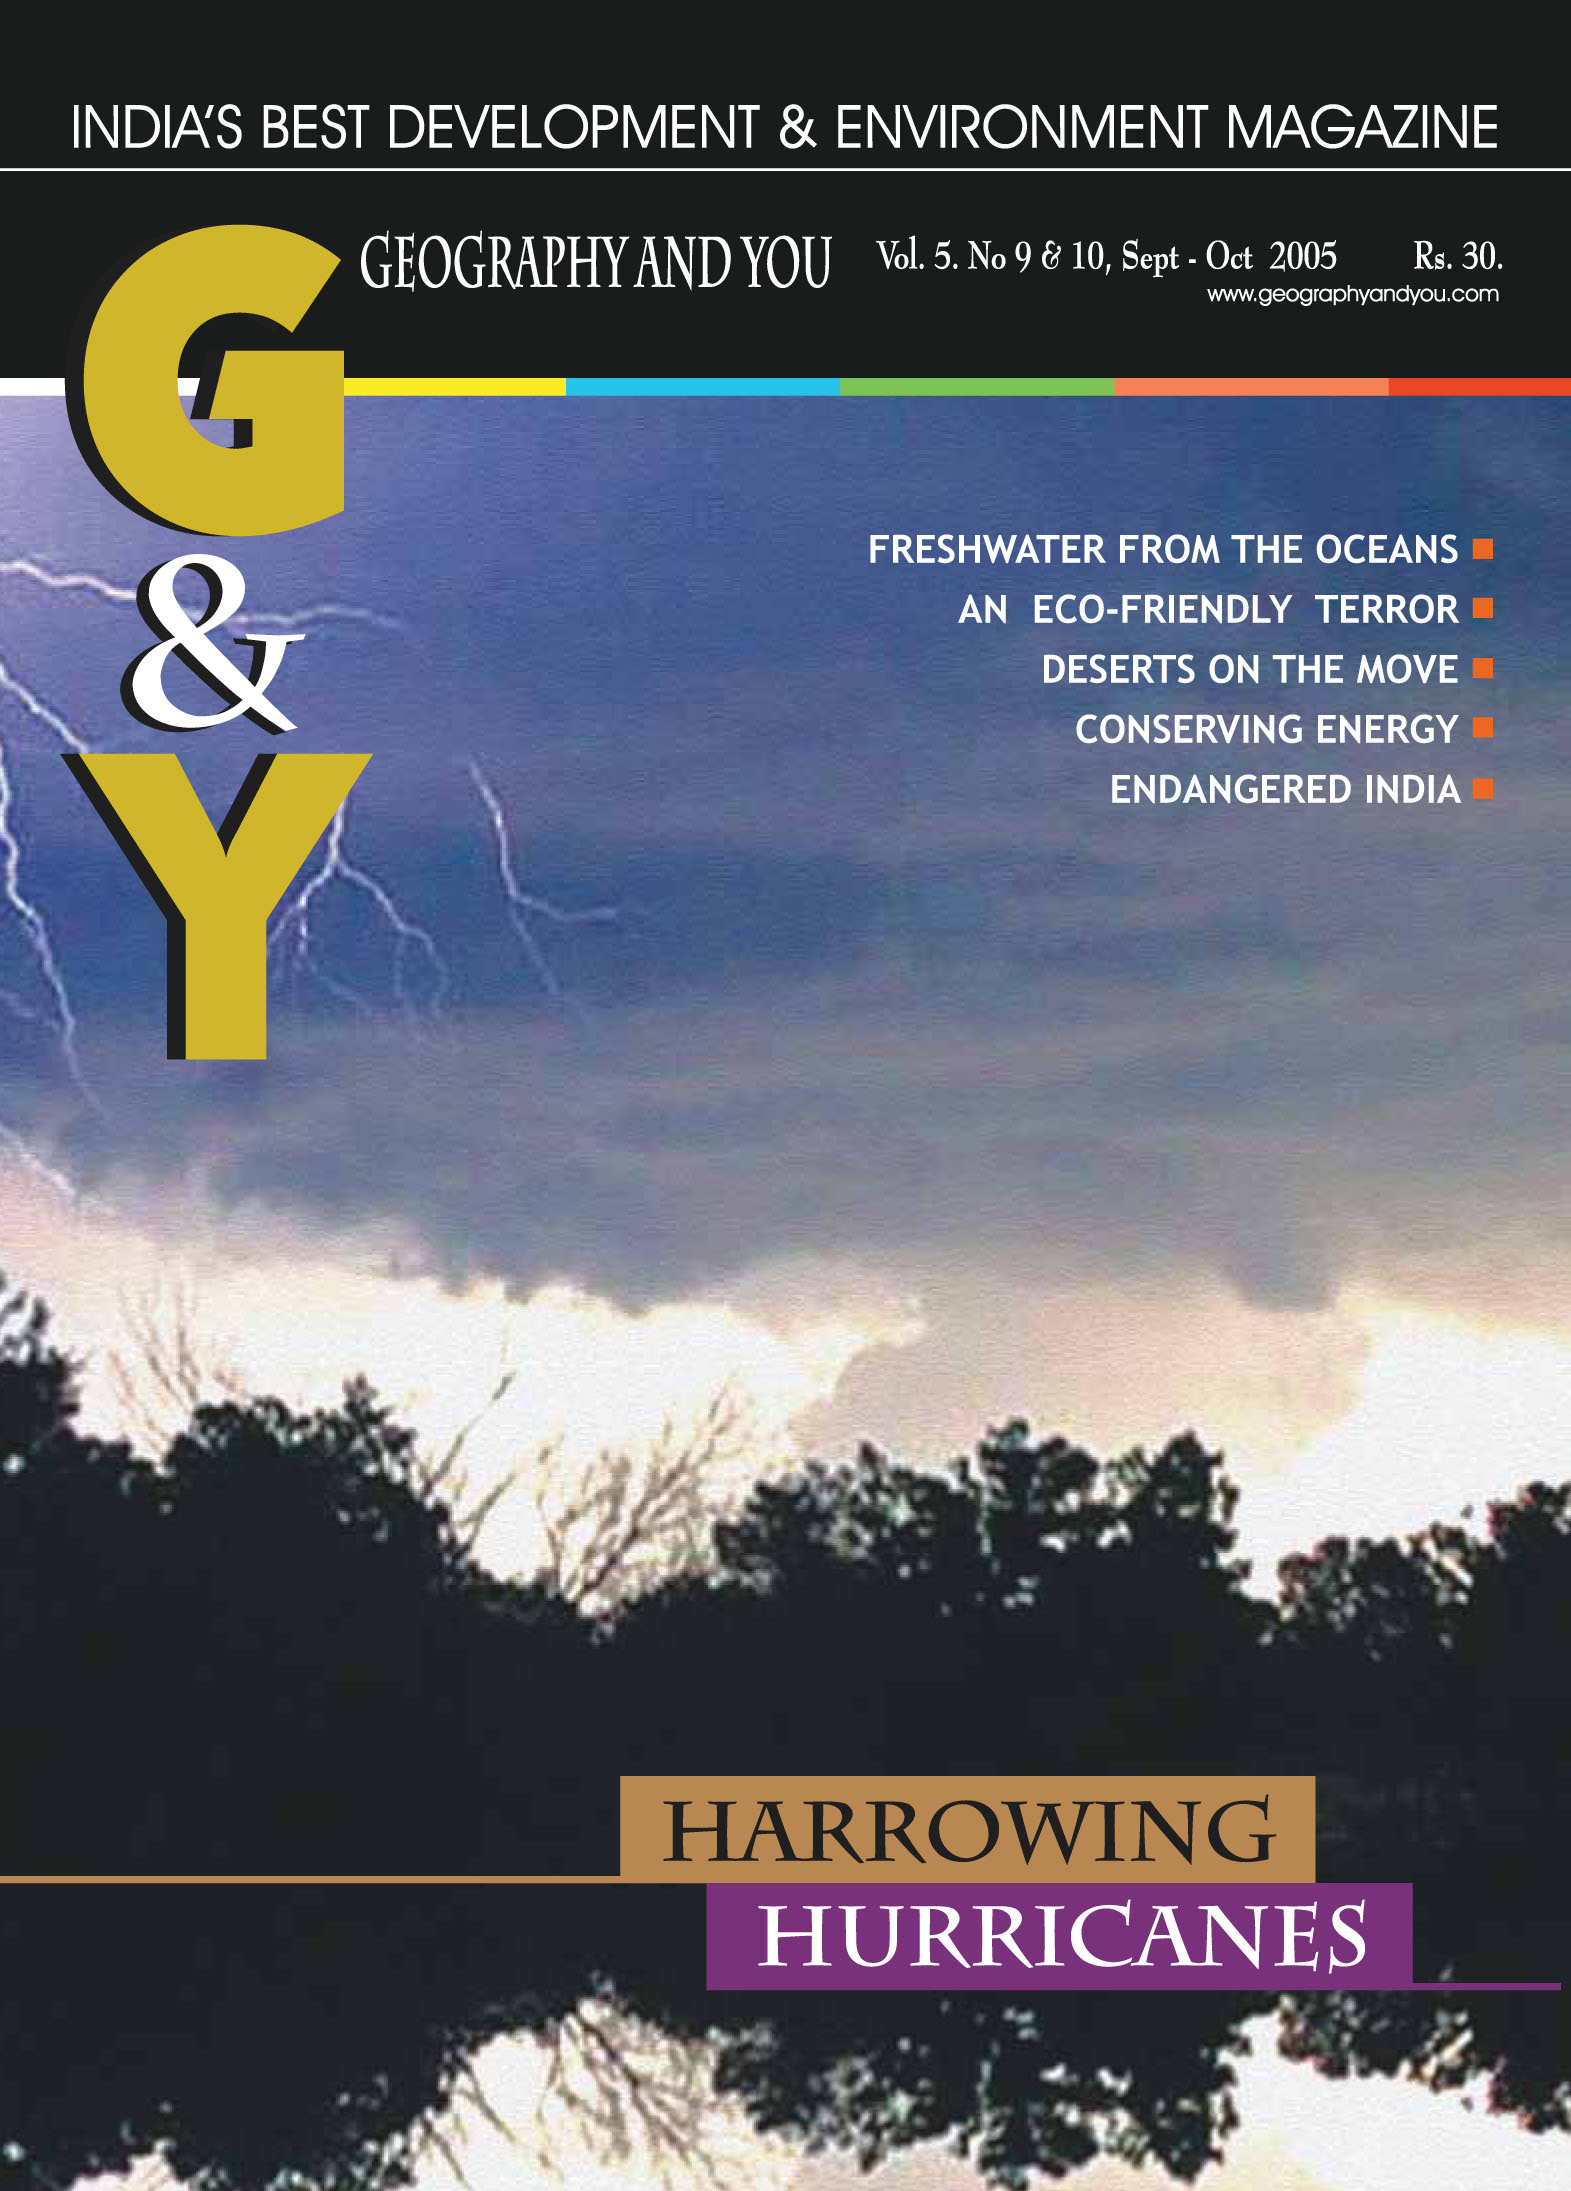 Harrowing Hurricanes (Sept-Oct 2005) cover